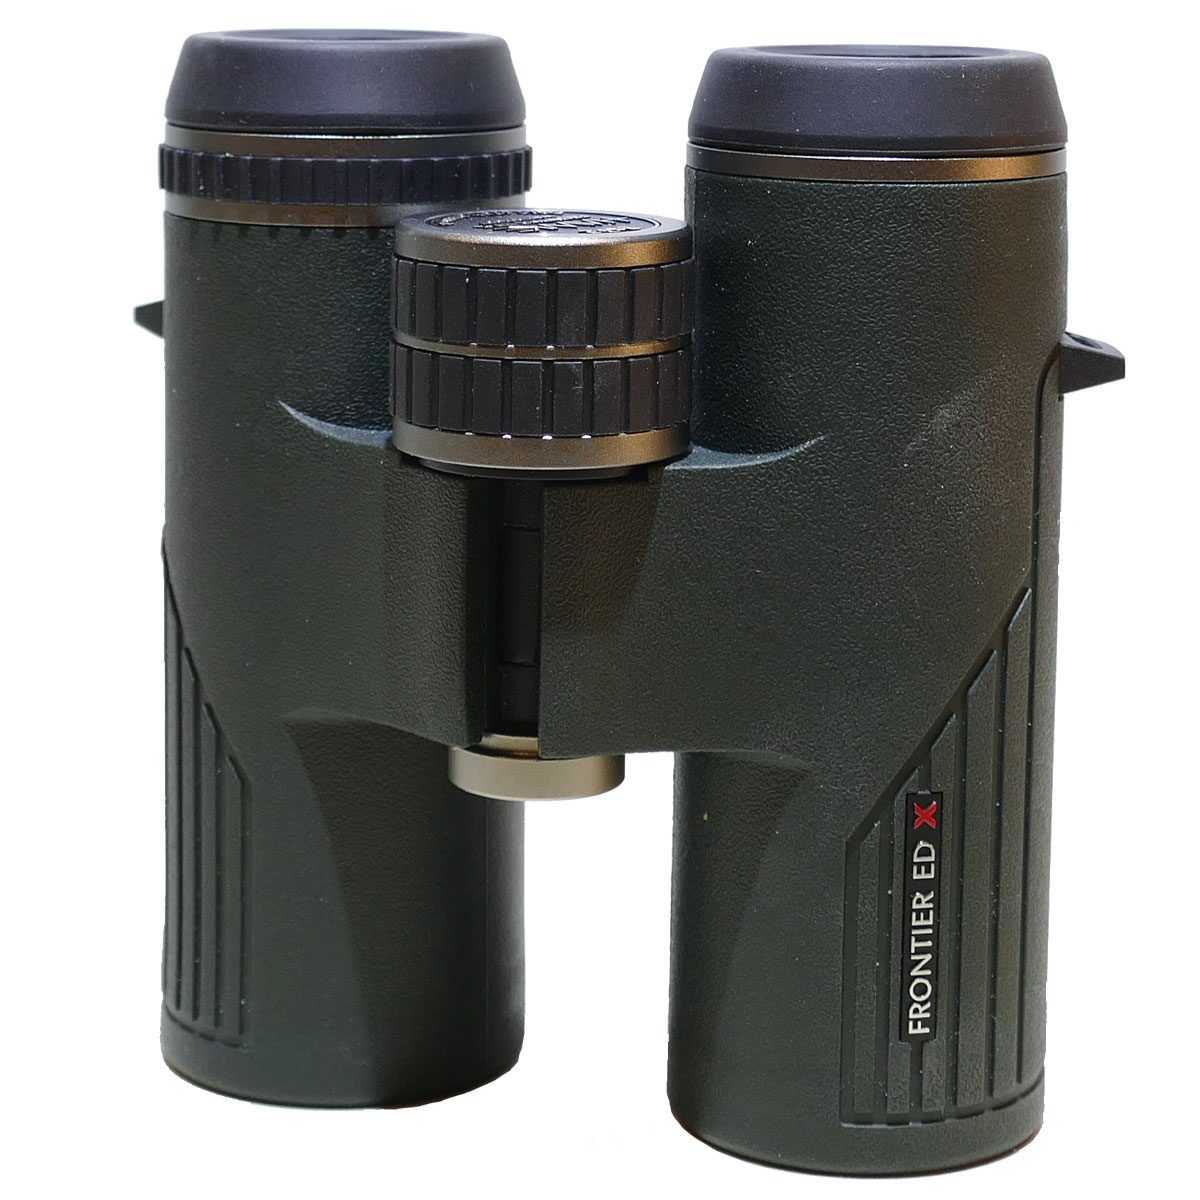 Green and black binoculars